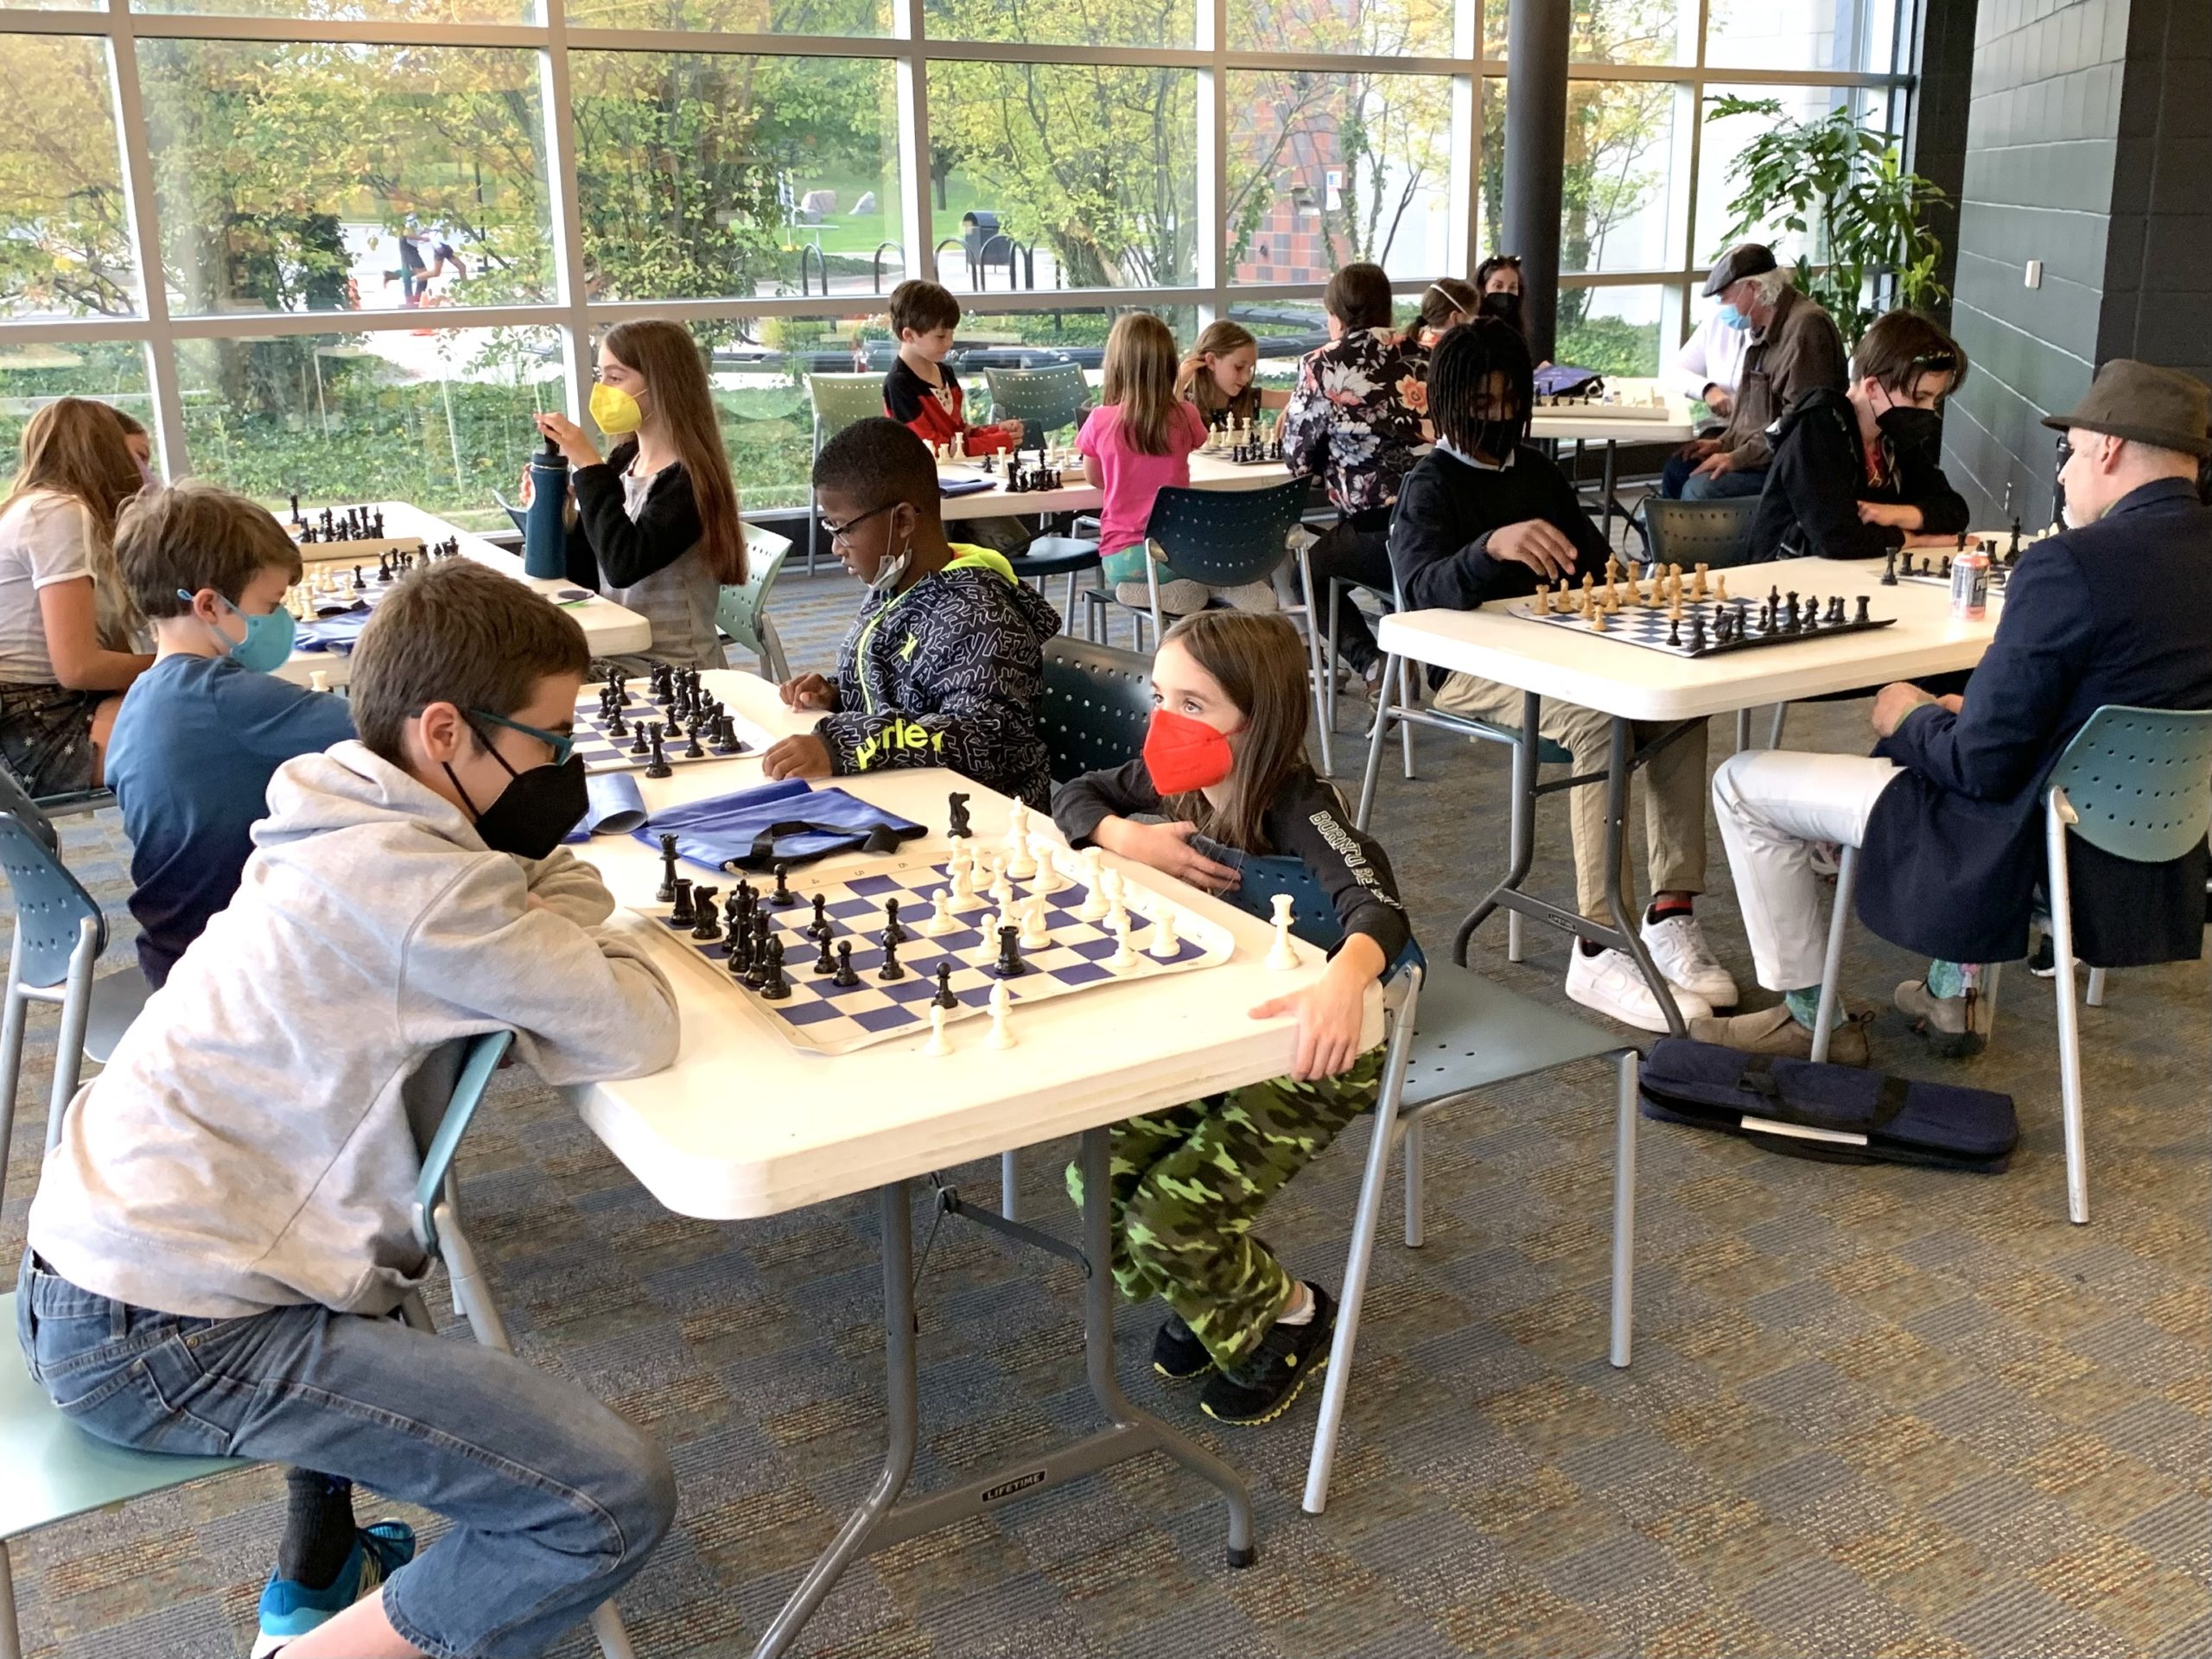 Chess Club - Ypsilanti District Library